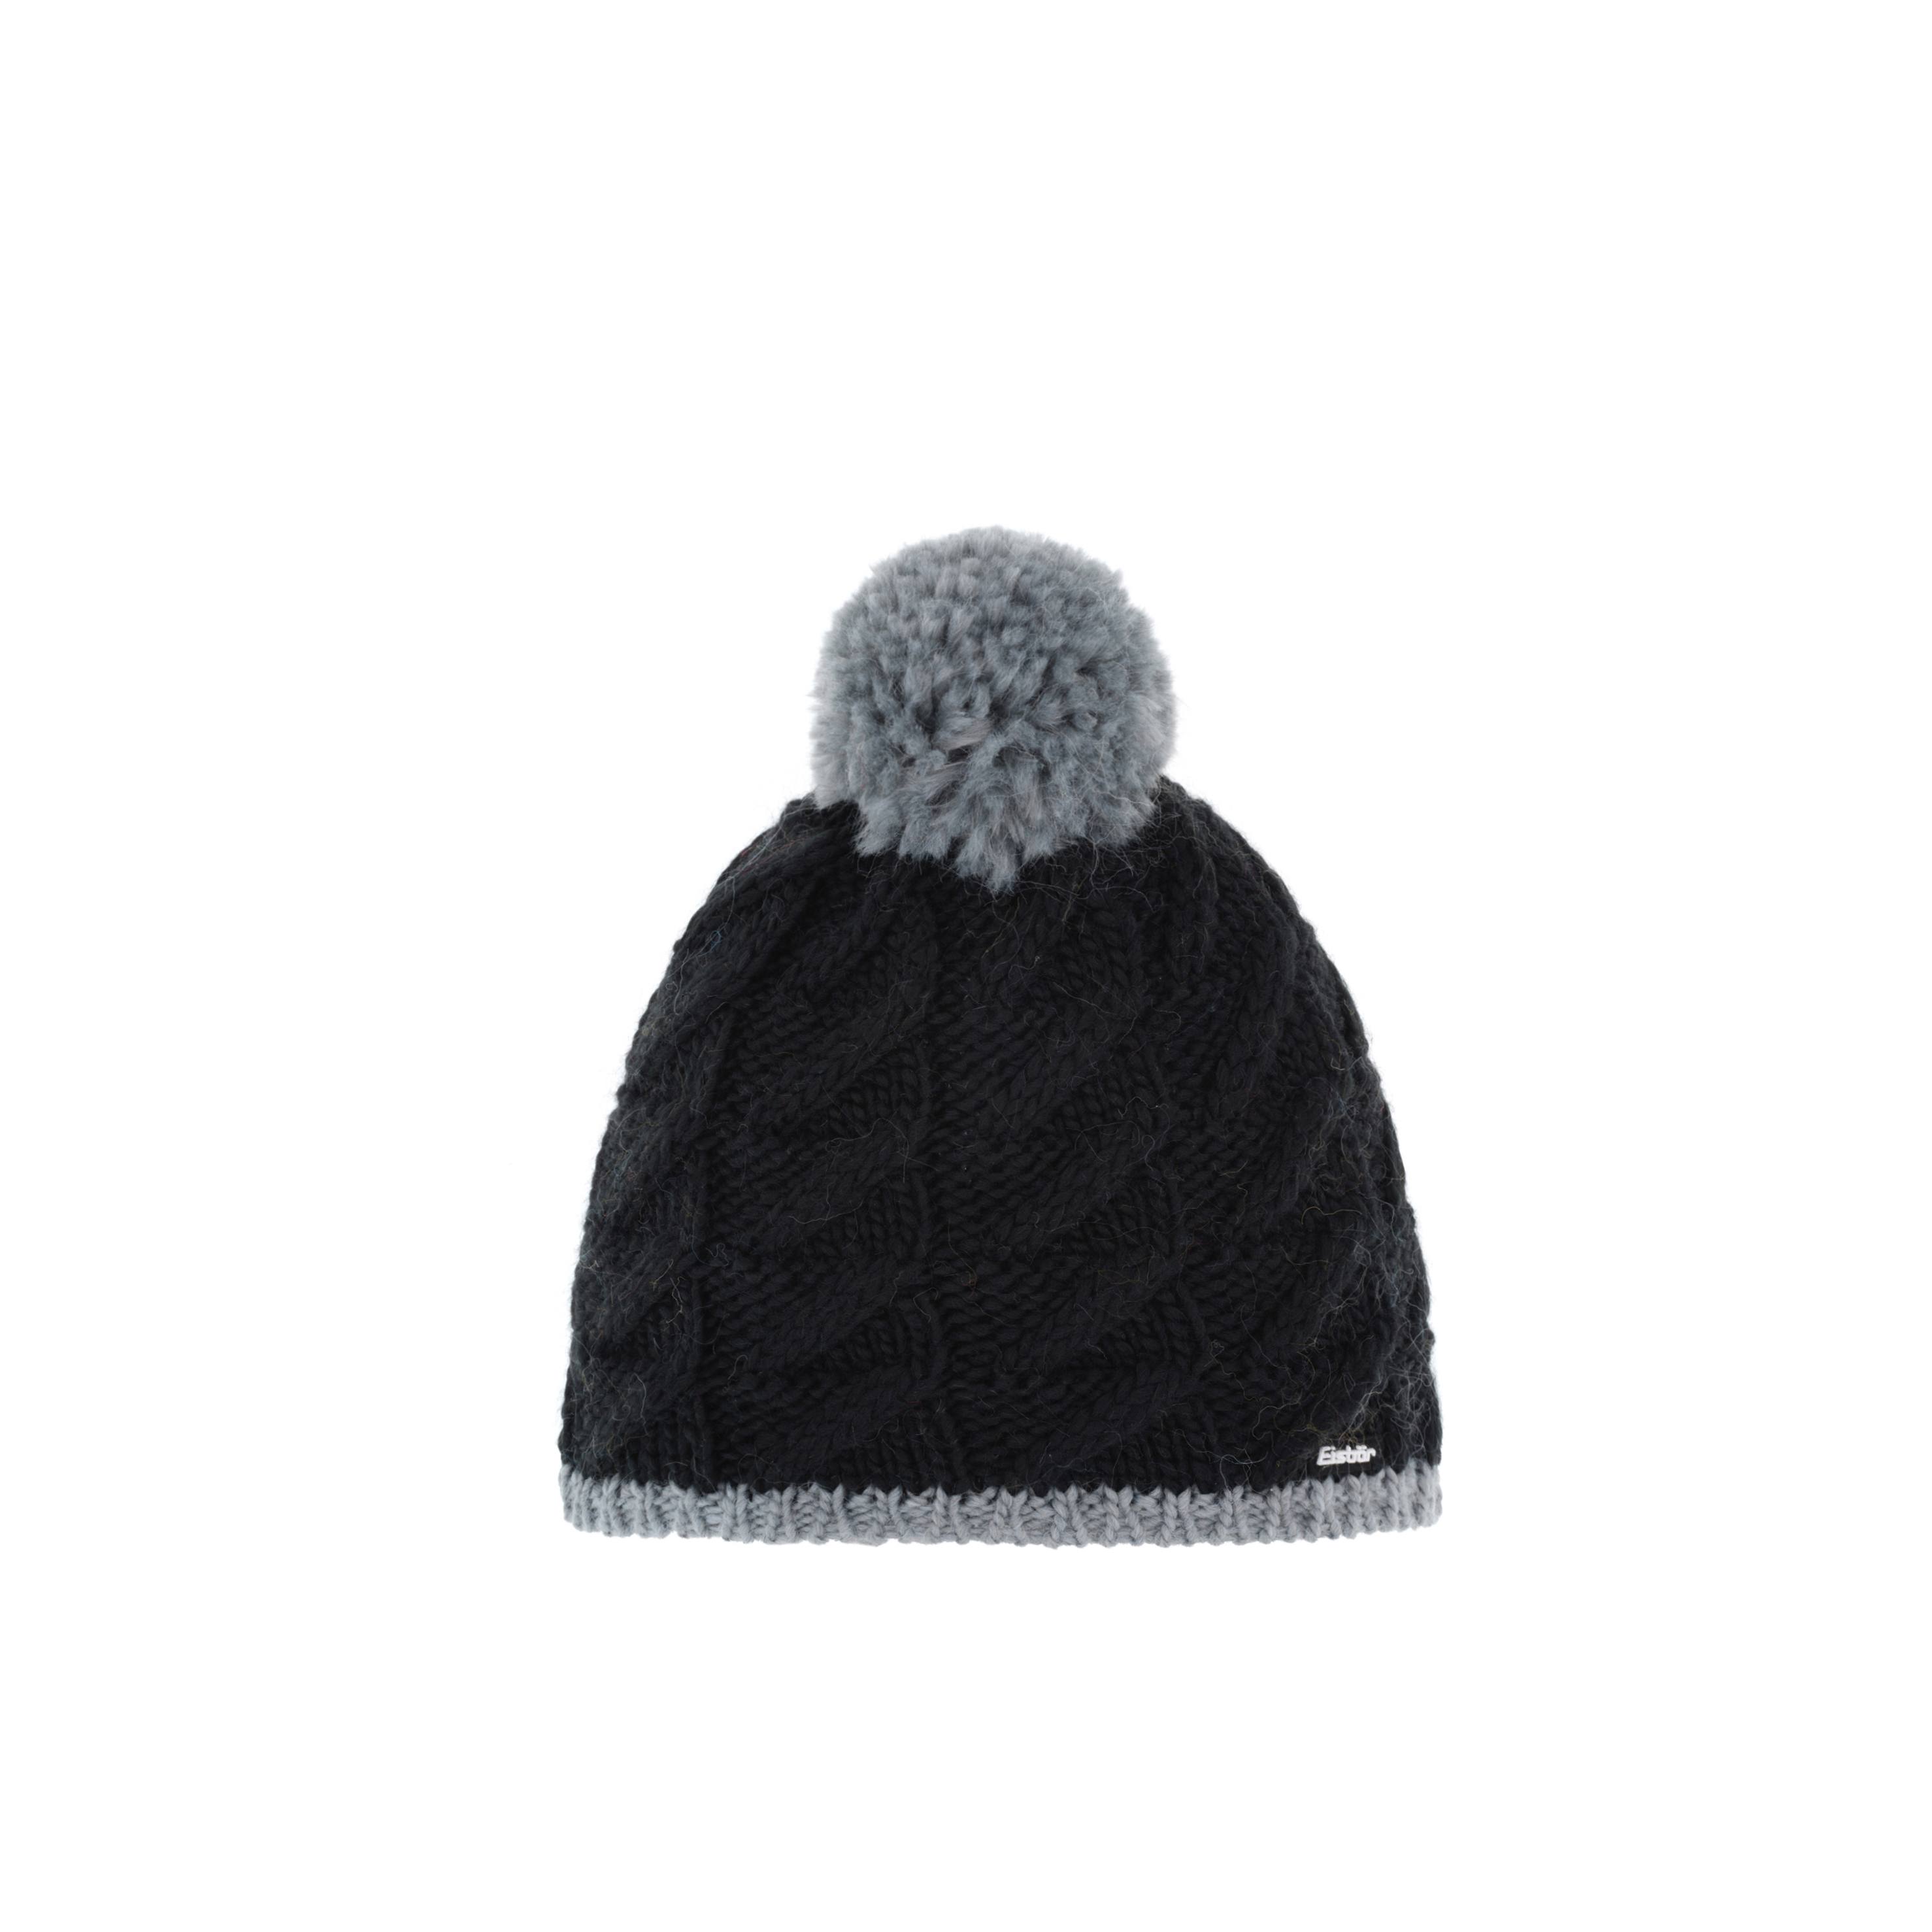 Eisbär Asteria Pompon Mütze - schwarz/grau